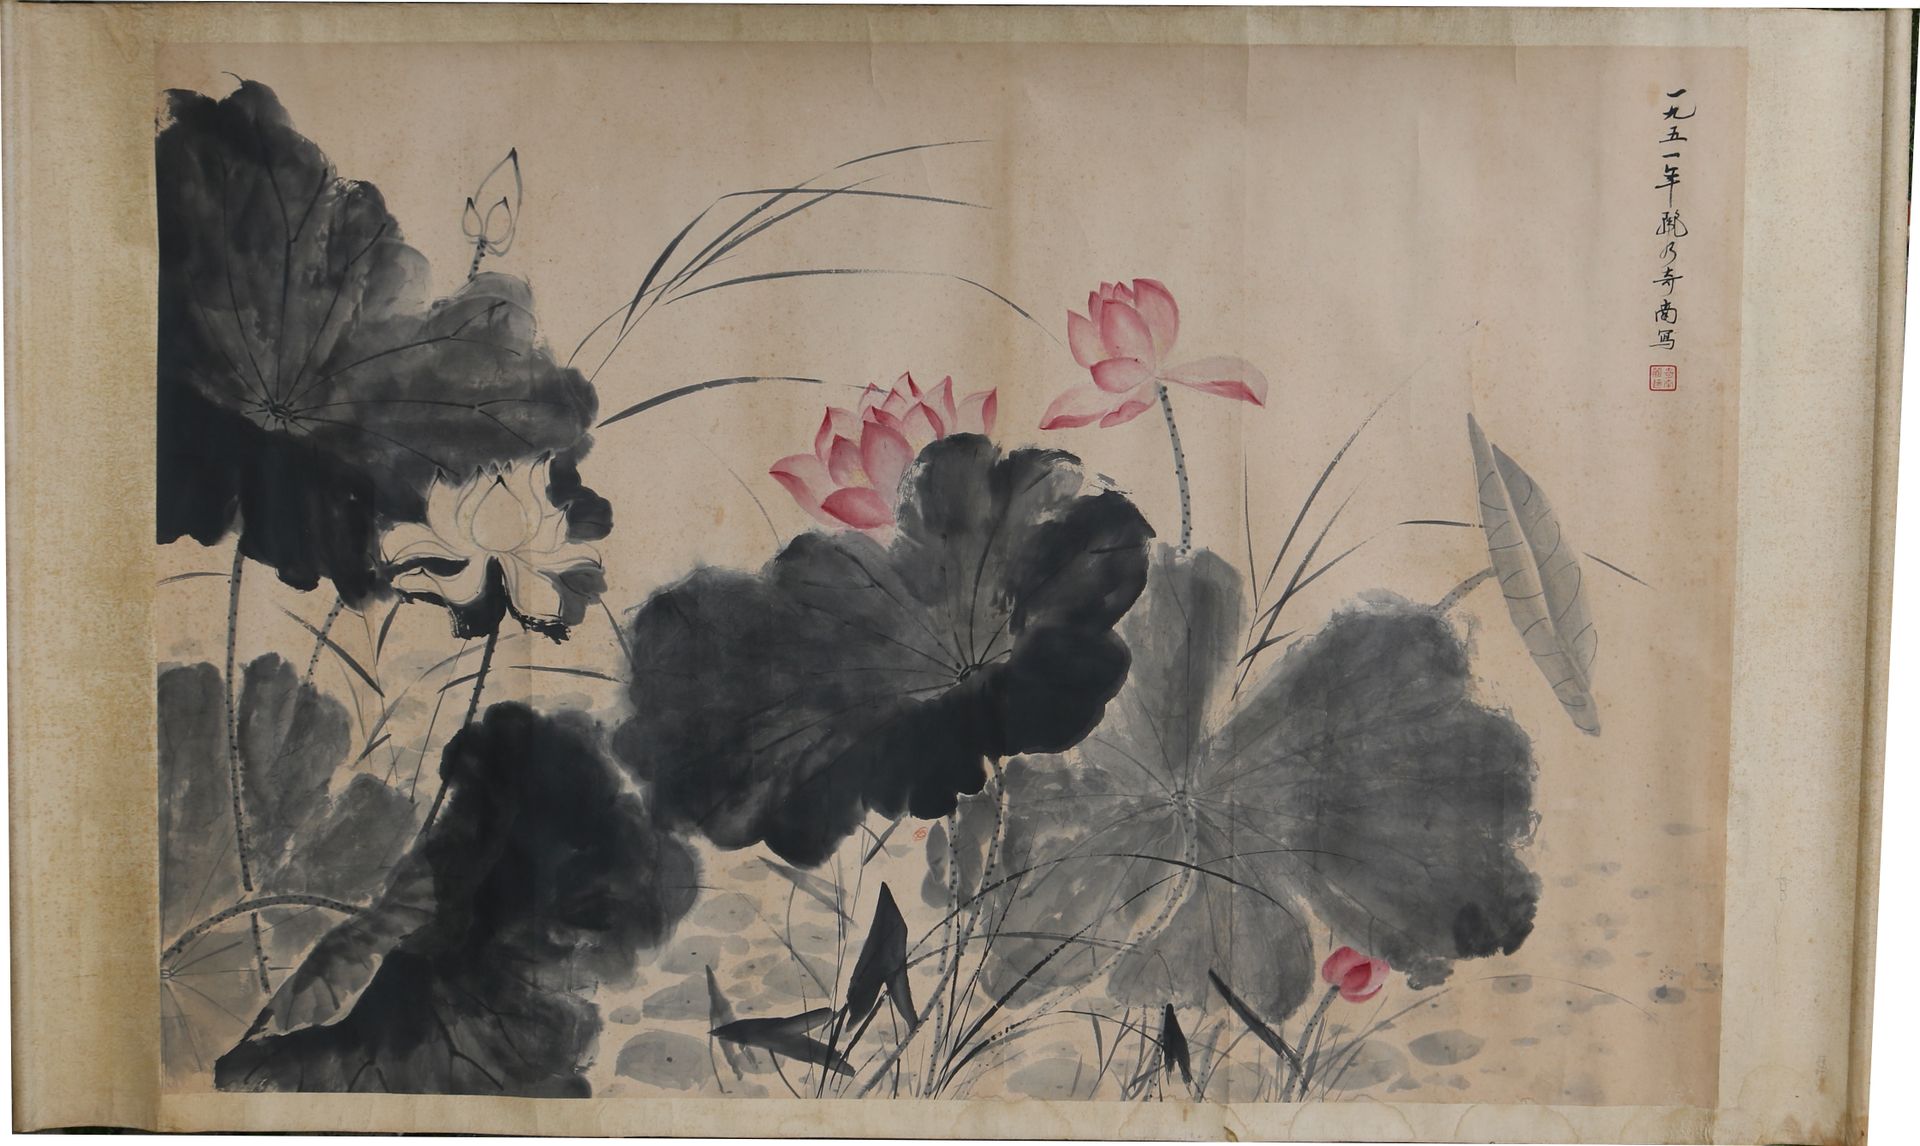 Qi Nan 中国，1951年
齐楠
纸上的水墨和色彩，荷花的叶子中的荷花

纸上水墨和色彩，荷花的叶子。日期为1951年，署名齐楠。

专家：Cabinet &hellip;